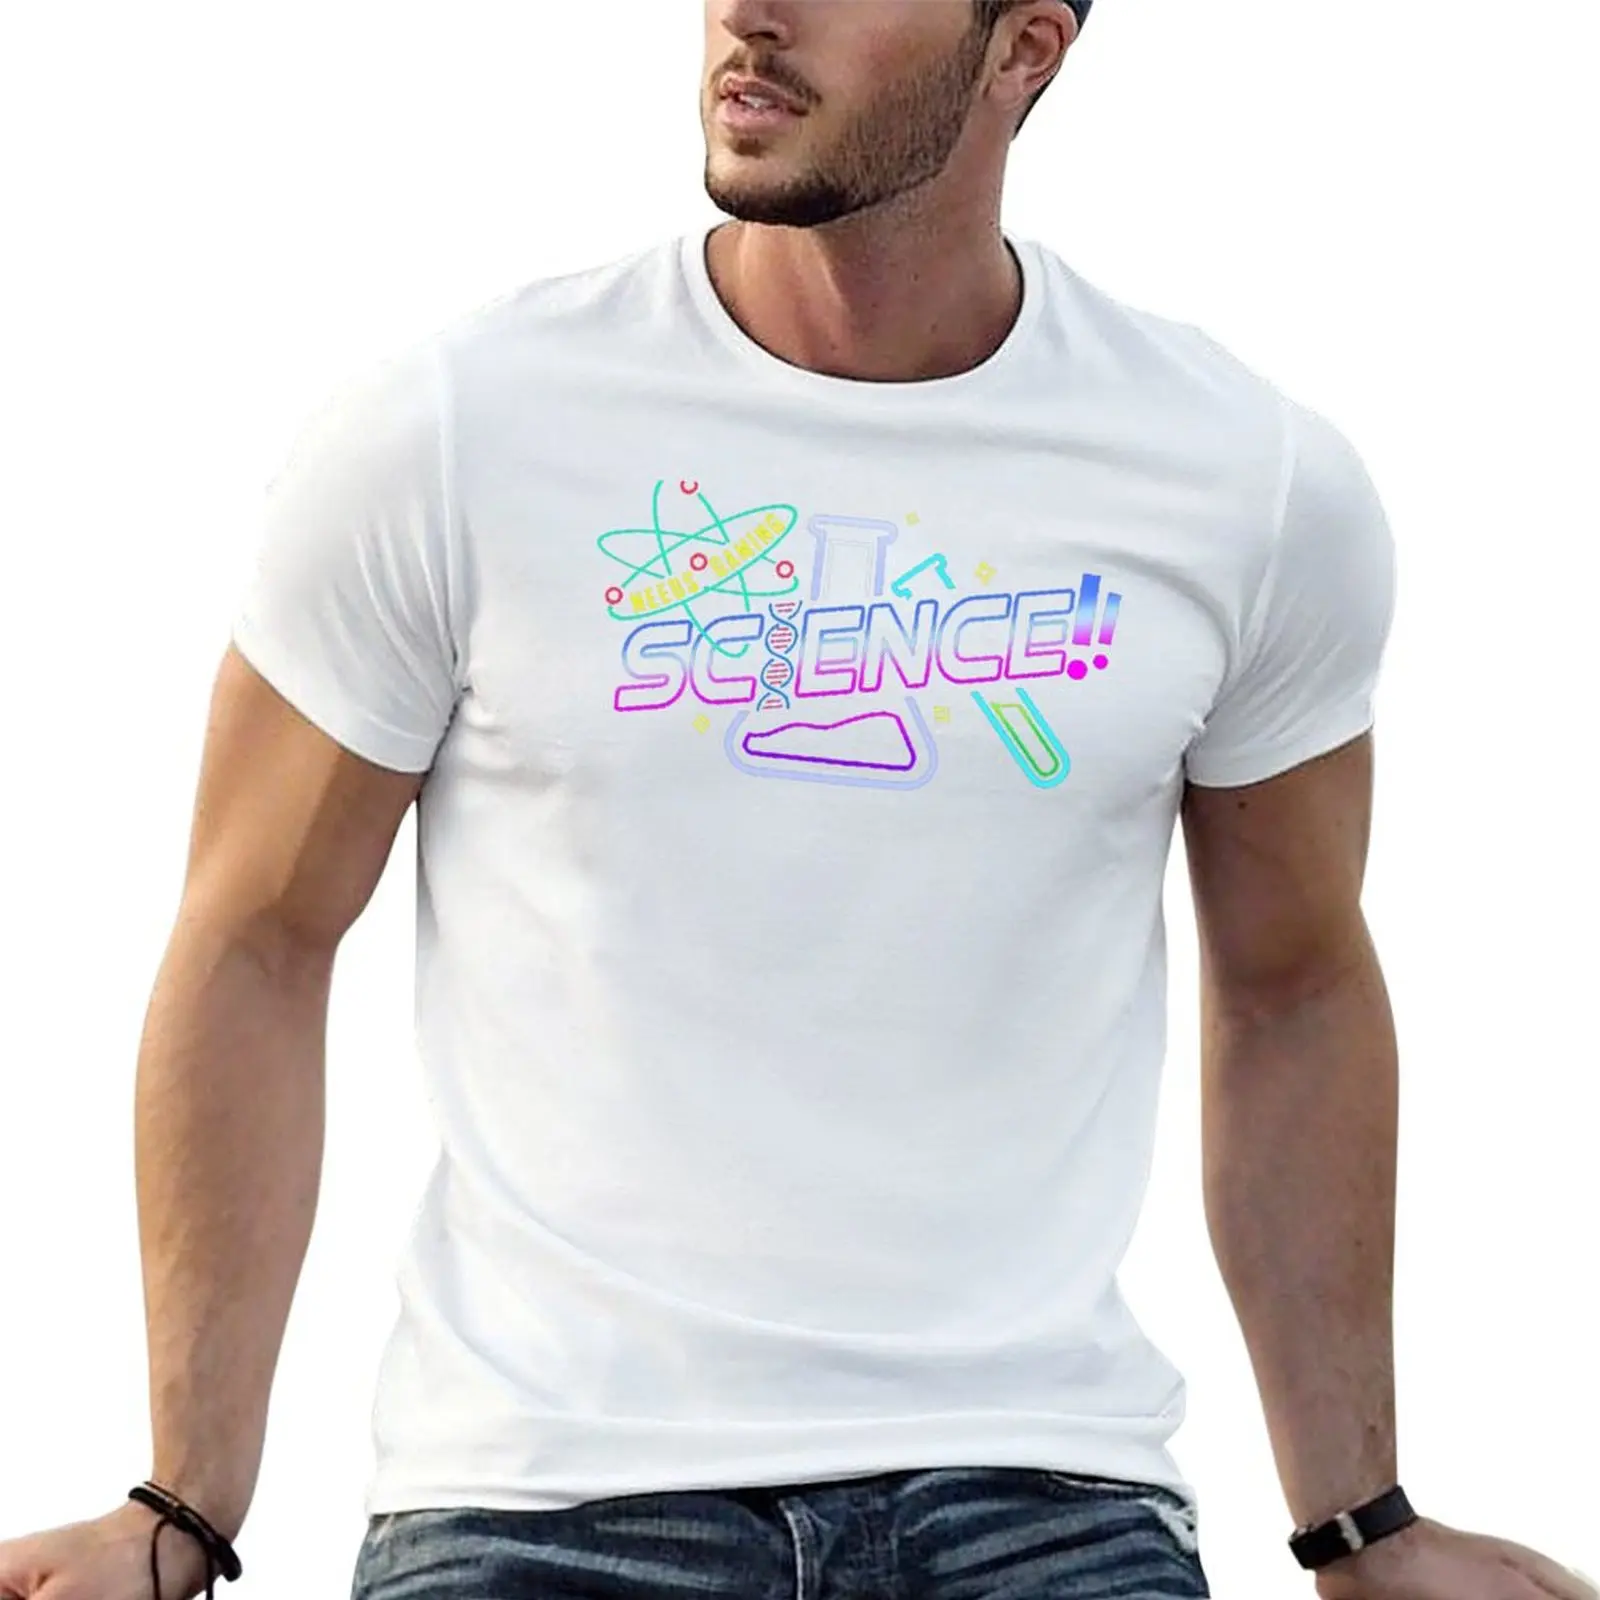 

Neebs Gaming T-shirt sublime customizeds plus sizes new edition plain black t shirts men